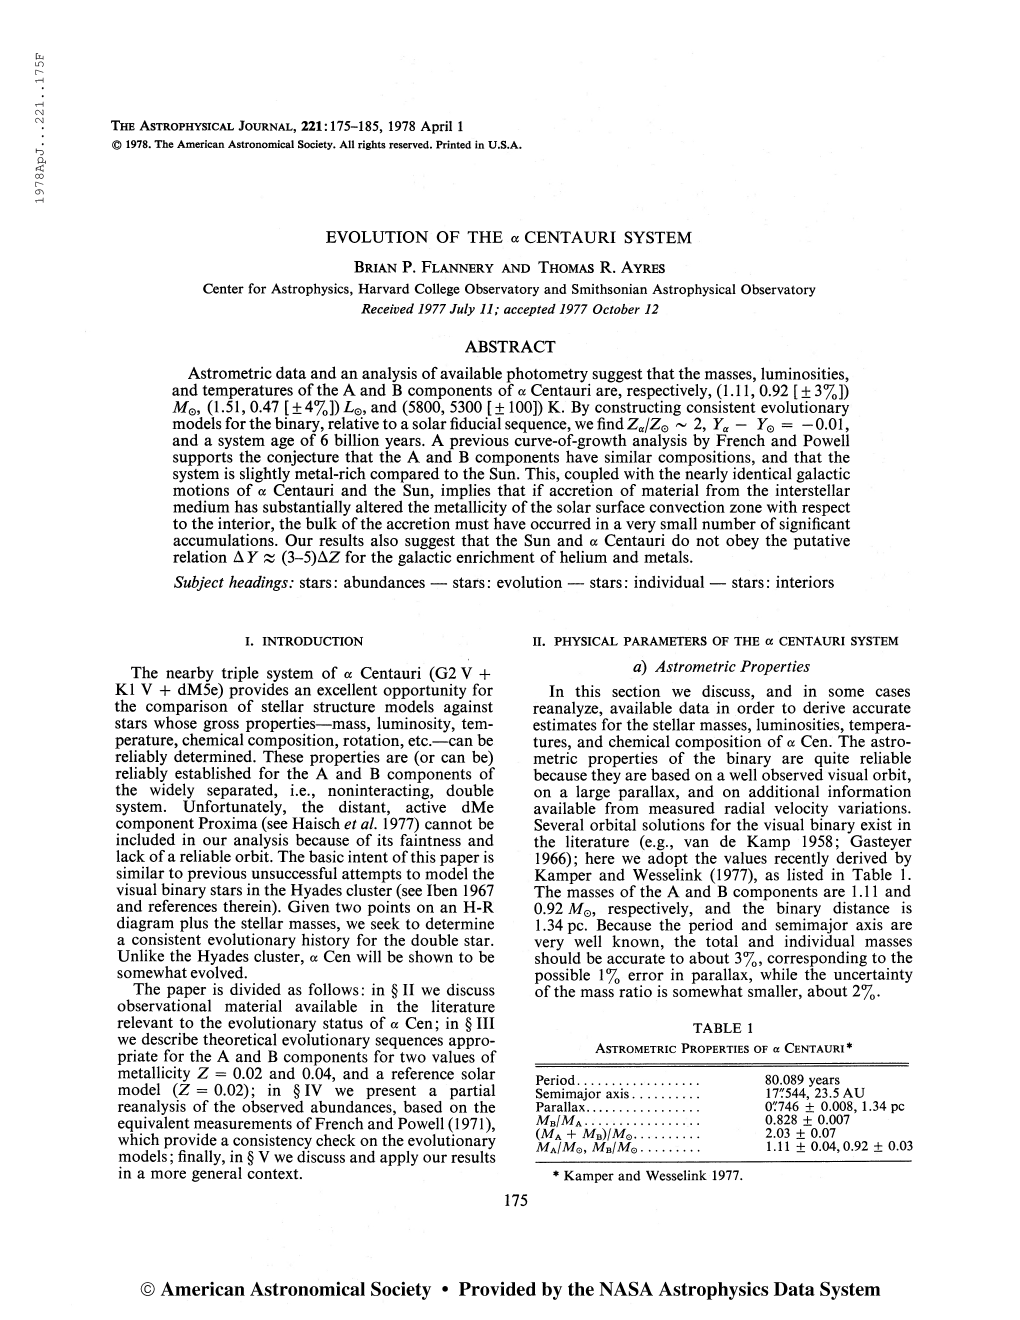 1978Apj. . .221. .175F the Astrophysical Journal, 221:175-185